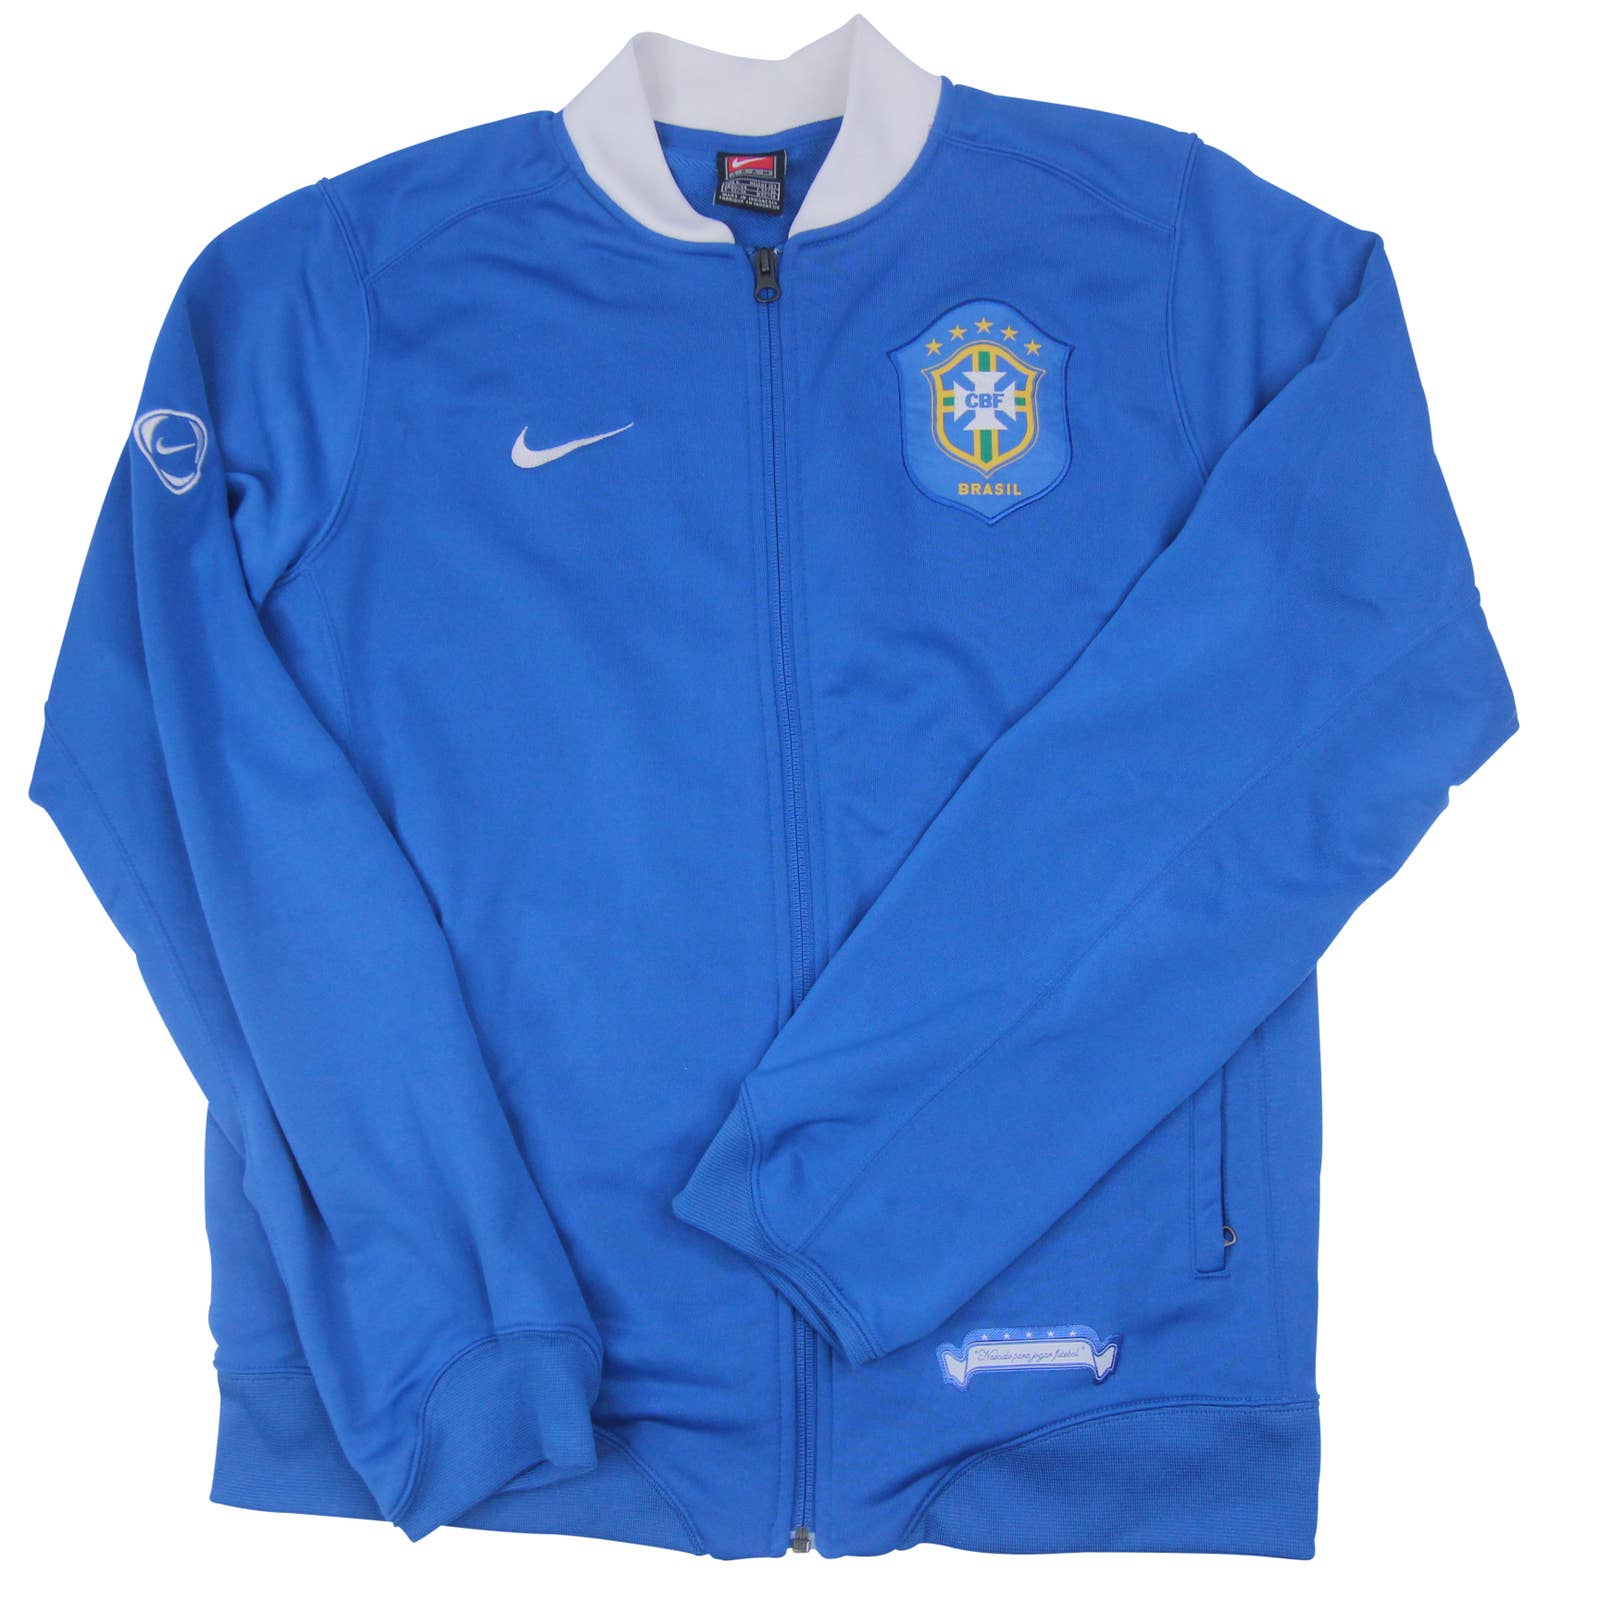 1998/99 Brazil Football Track Jacket / Official Old Nike Soccer Jersey